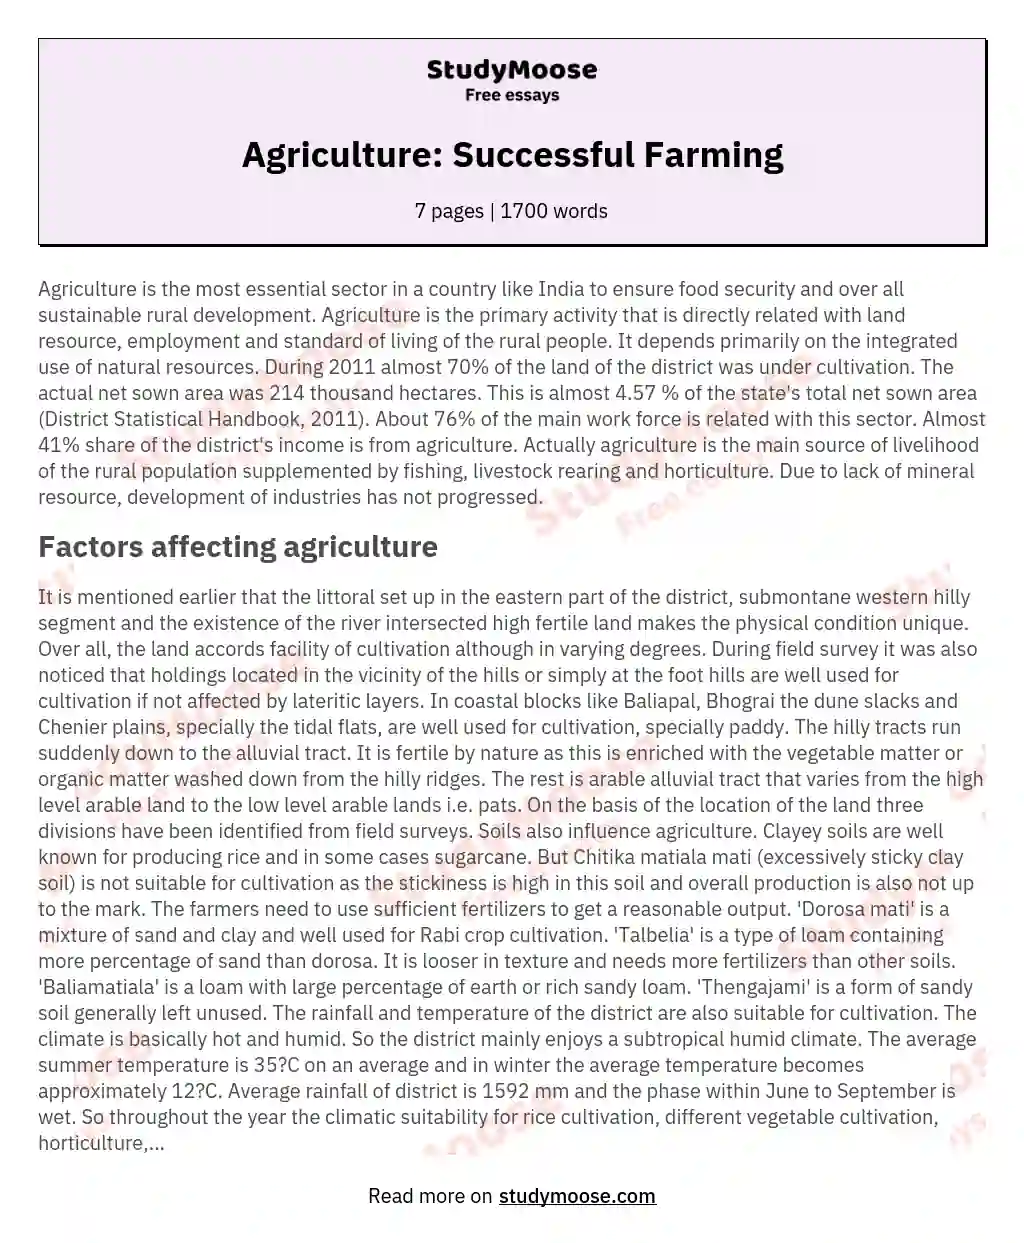 Agriculture: Successful Farming essay